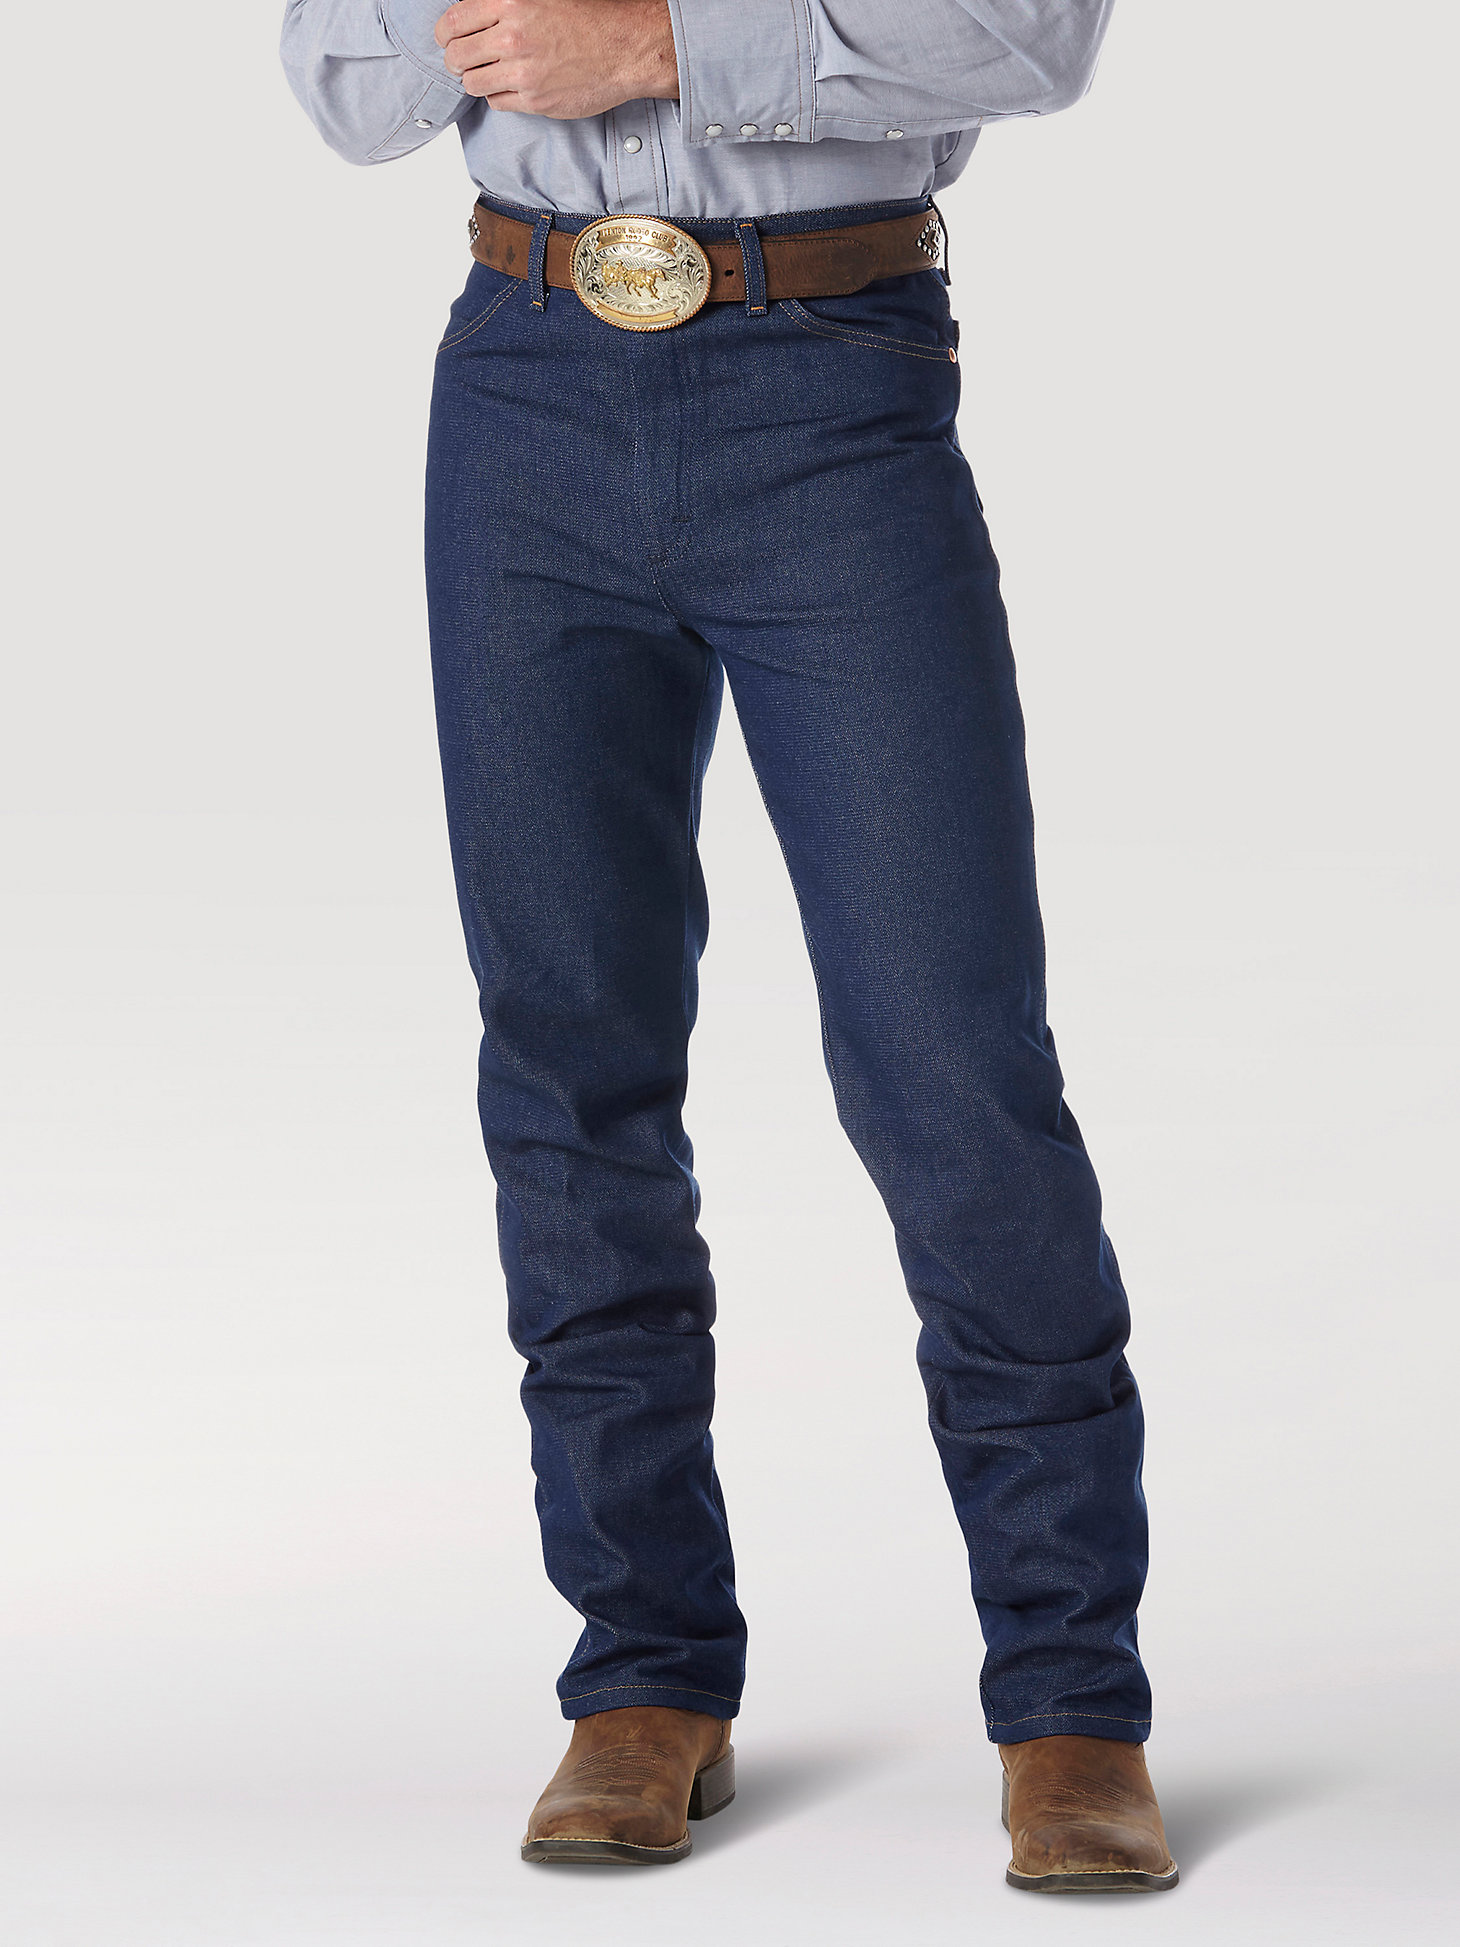 Wrangler® Cowboy Cut® Rigid Slim Fit Jean in Rigid Indigo main view